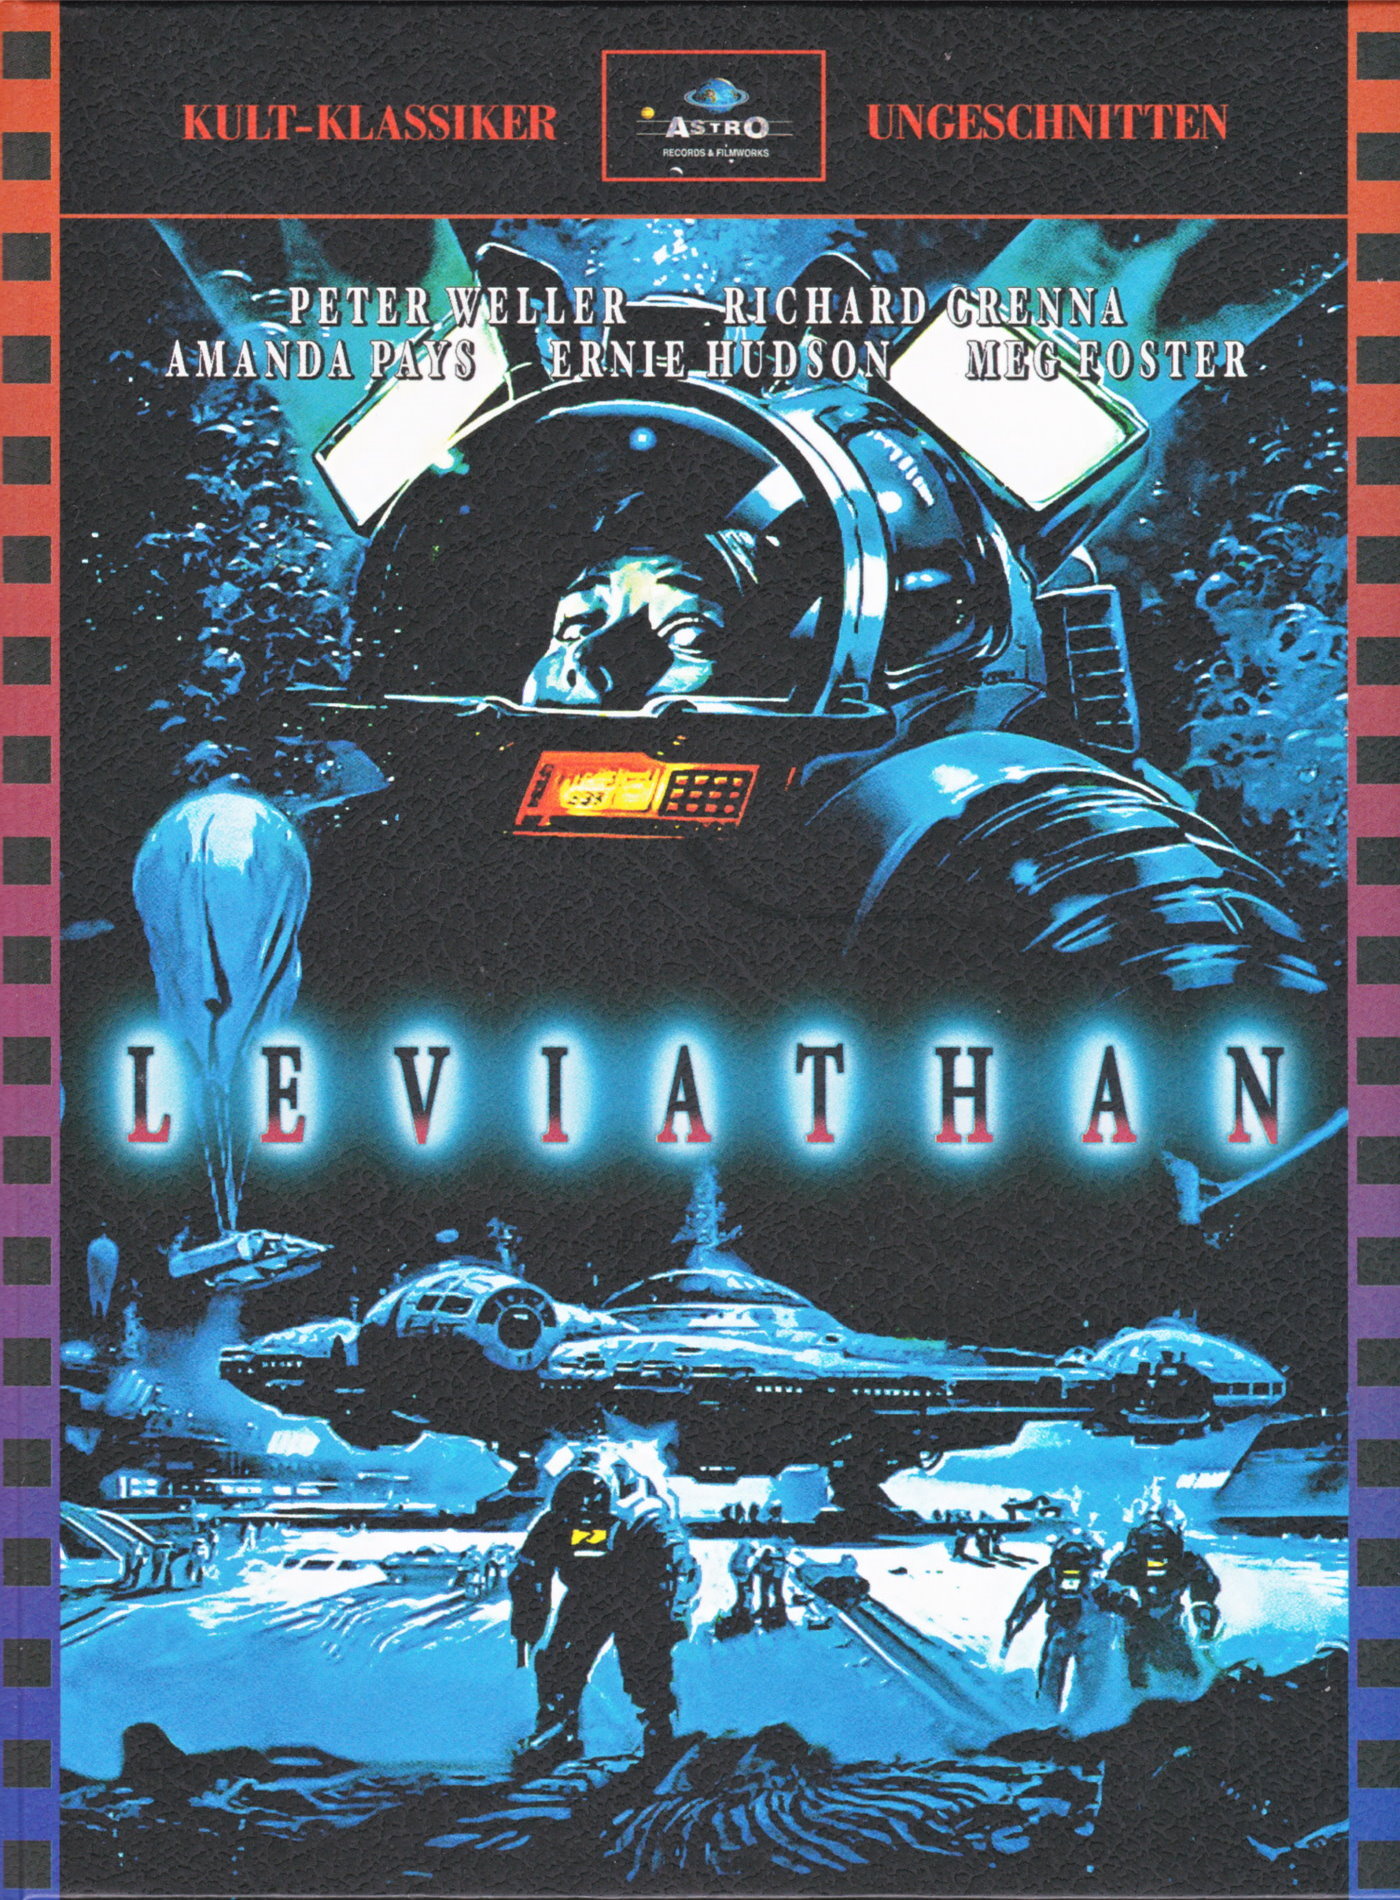 Cover - Leviathan.jpg